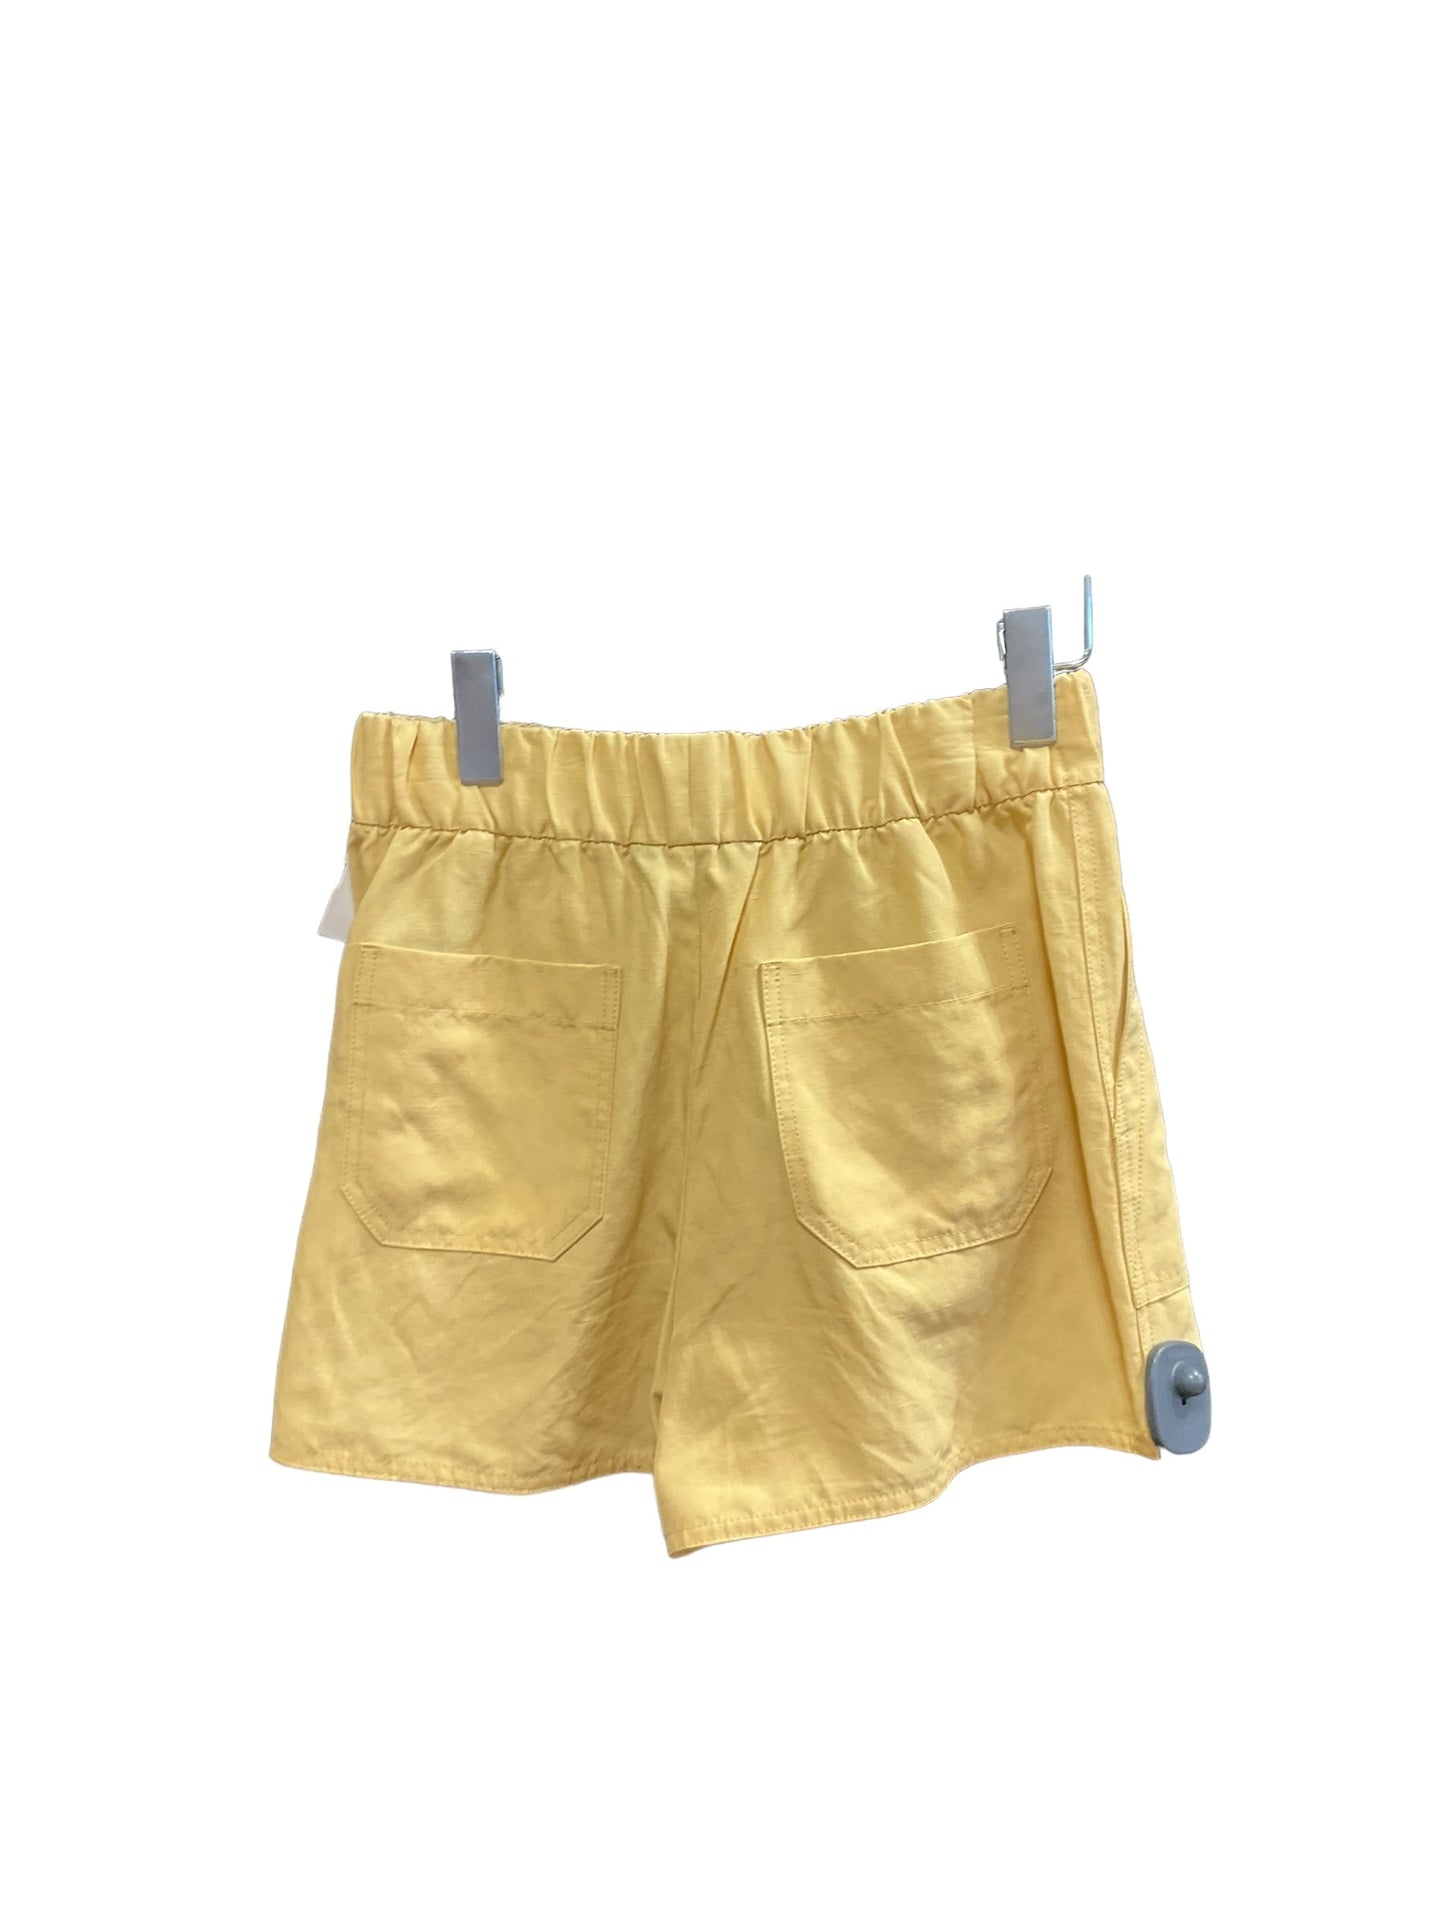 Yellow Shorts Club Monaco, Size 2